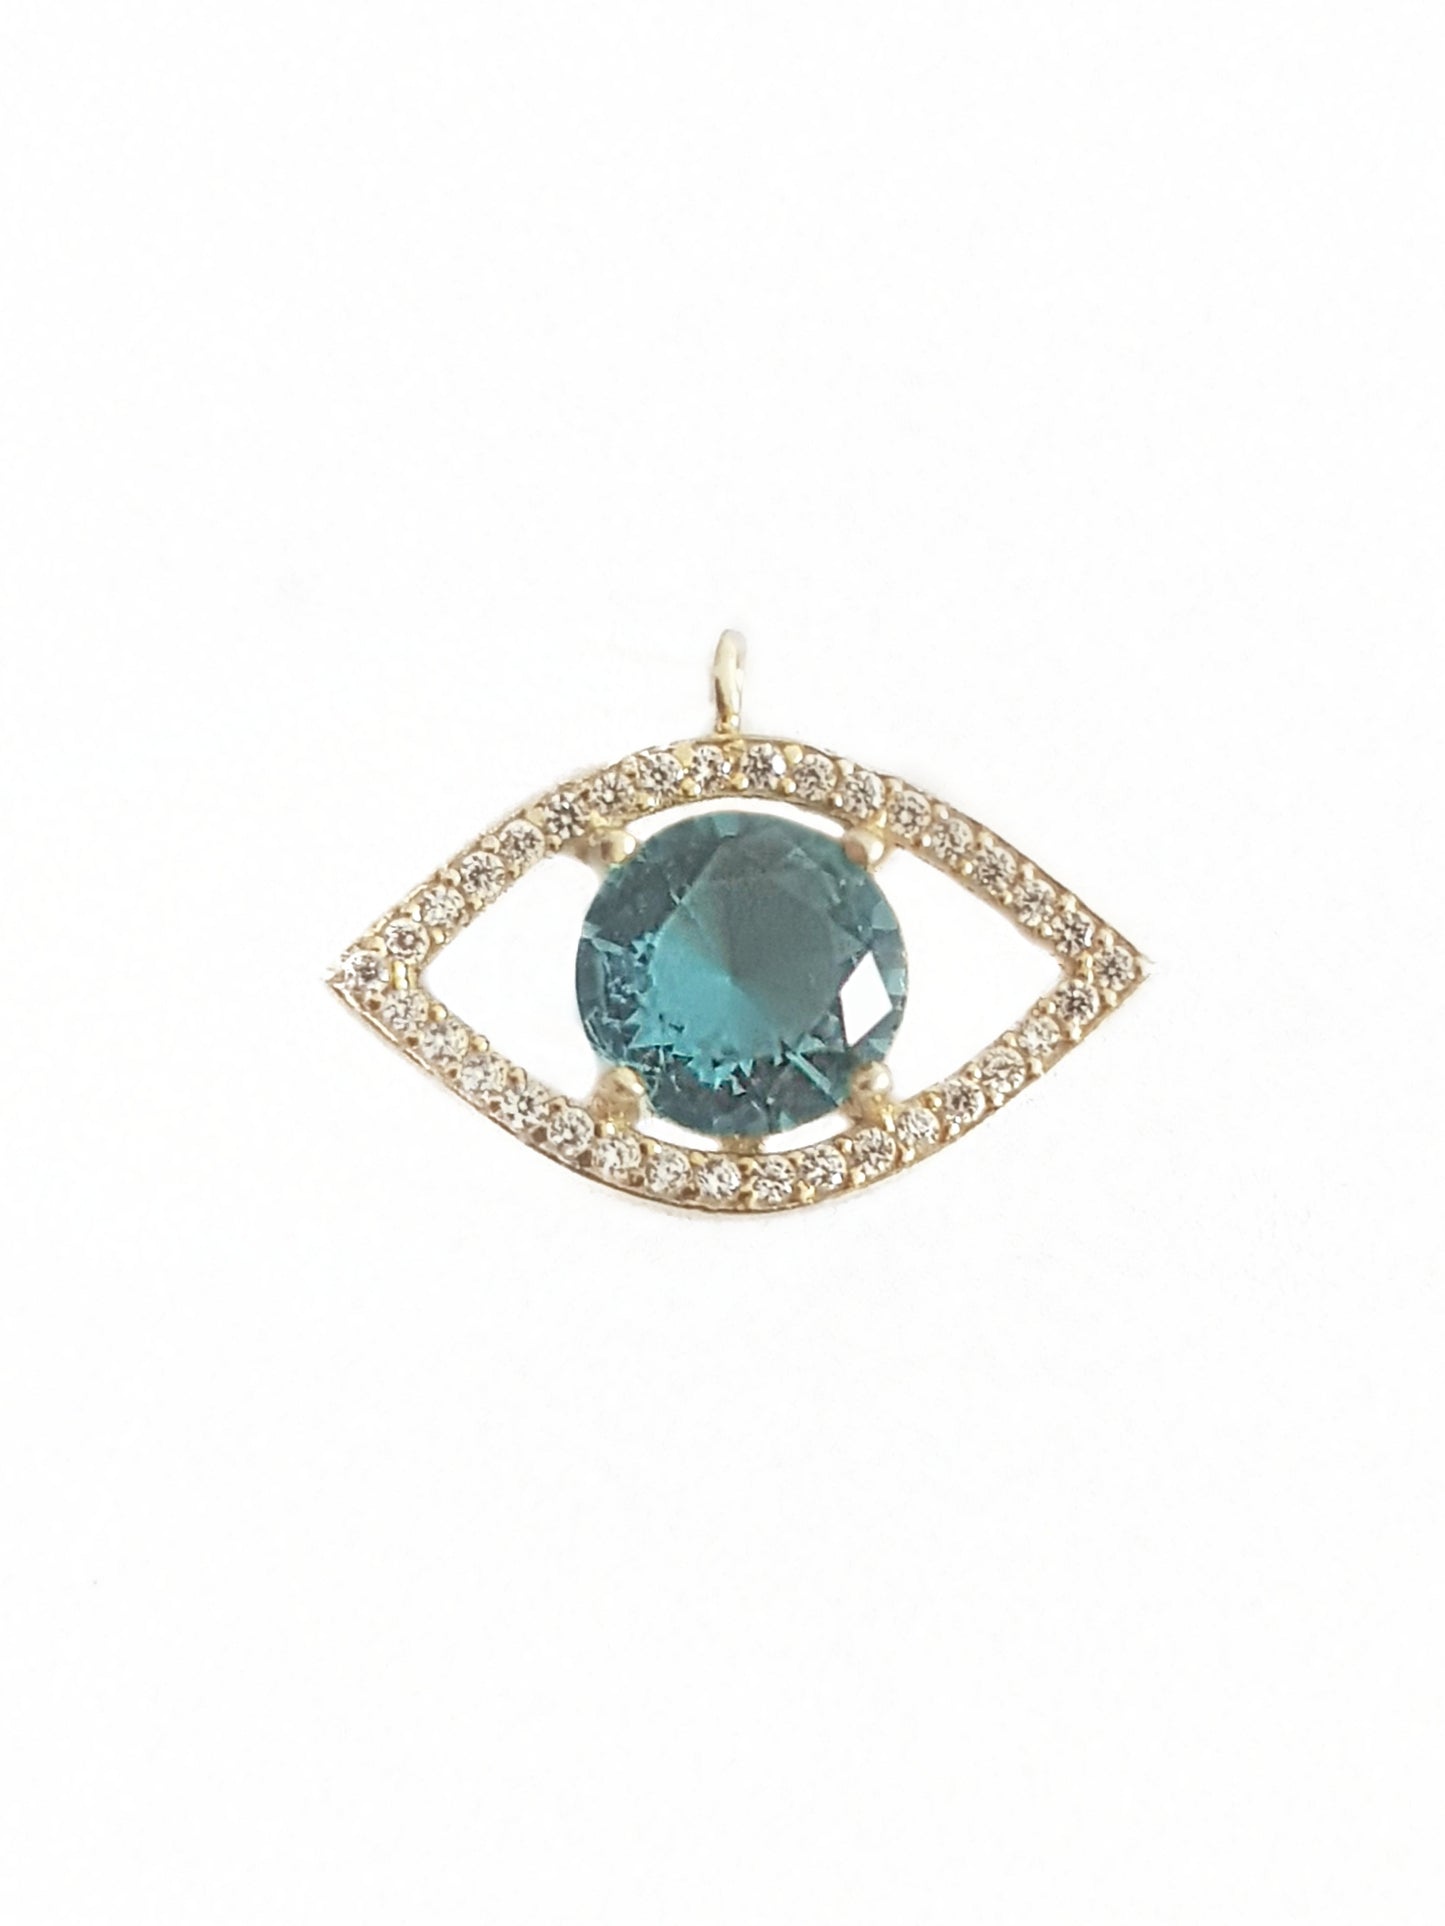 Blue Eye Charm